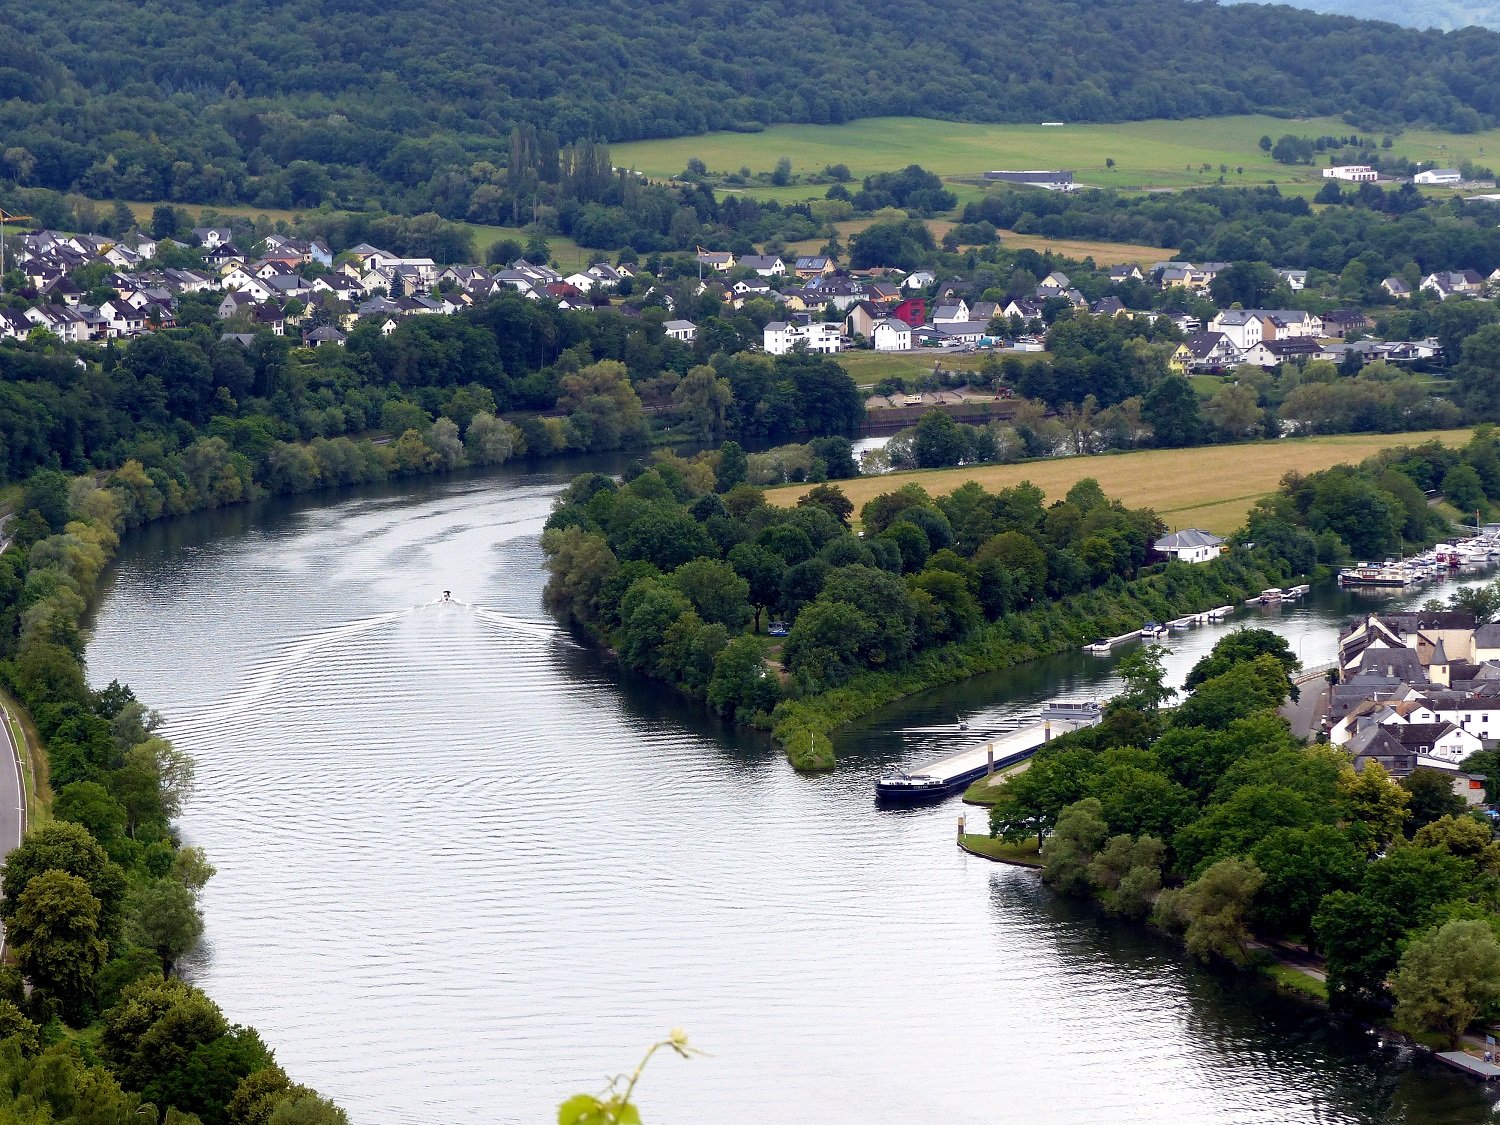 Река в германии приток мозеля. Река Бебра в Германии. Река Рейн в Германии. Германия река Рейн роландзен. Бебра город в Германии.